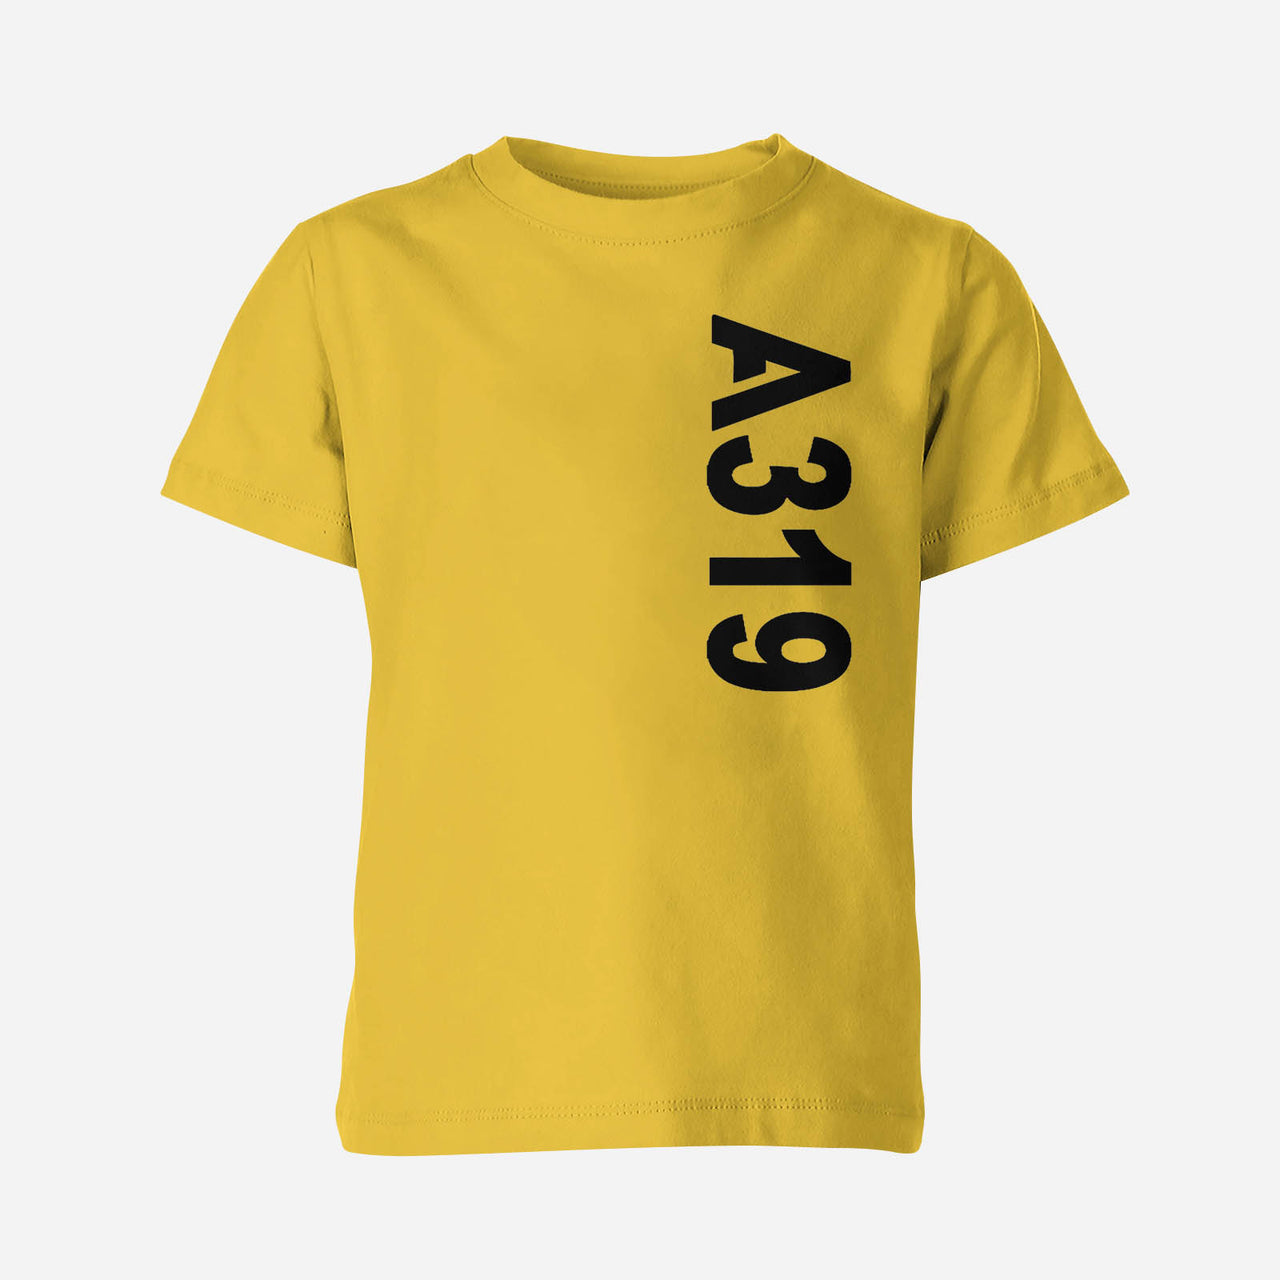 A319 Side Text Designed Children T-Shirts